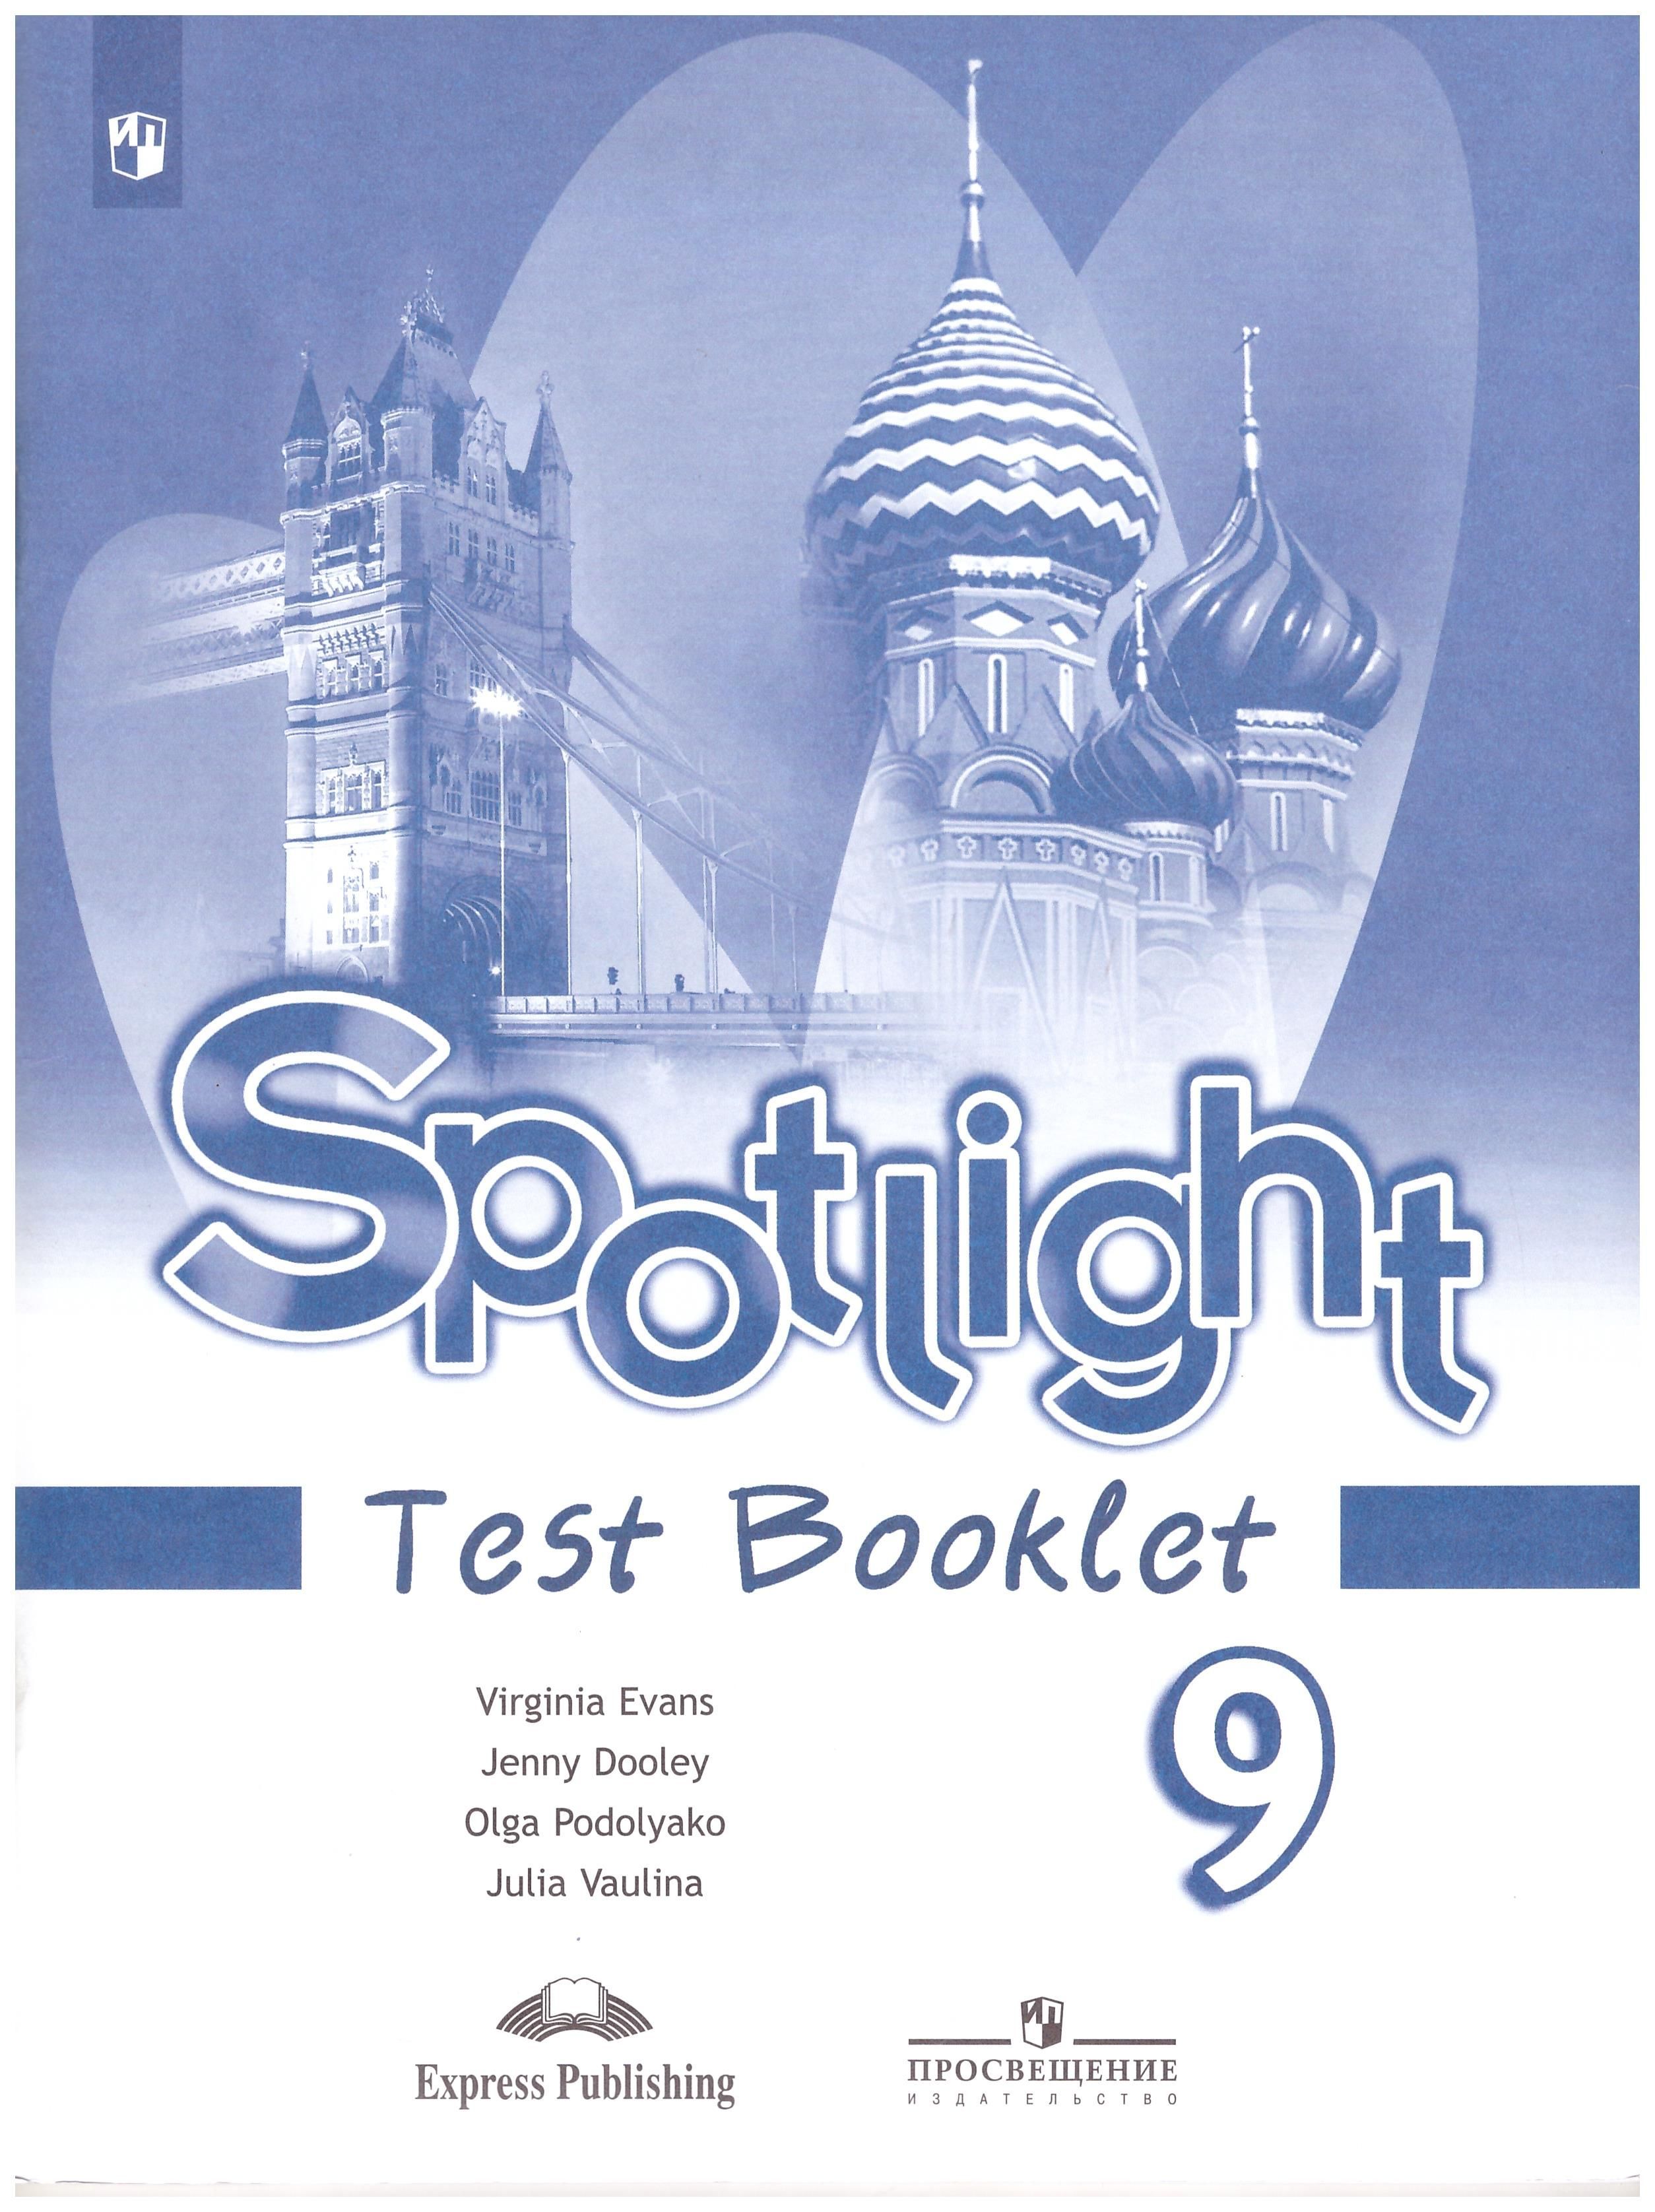 Английский 9 класс spotlight 2020. Test booklet 9 класс Spotlight ваулина. Английский язык 9 класс ваулина тест буклет. Спотлайт 11 класс тест буклет. Спотлайт 9 класс тест буклет.